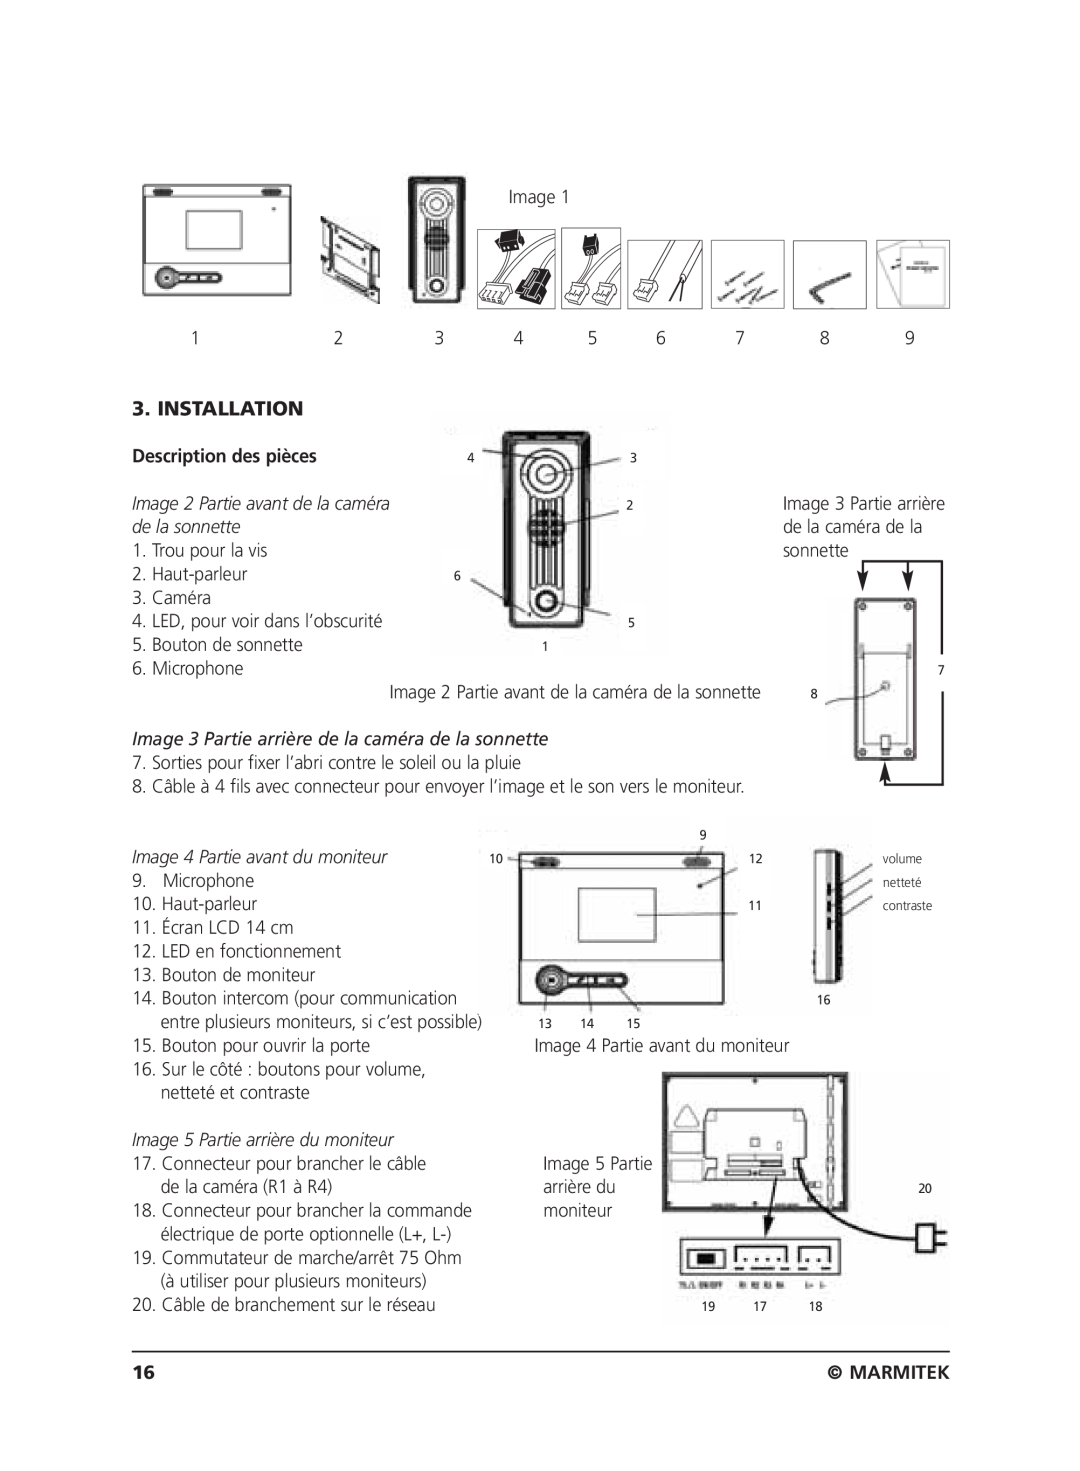 Marmitek VIDEO DOORPHONE user manual Description des pièces, Installation, Marmitek 